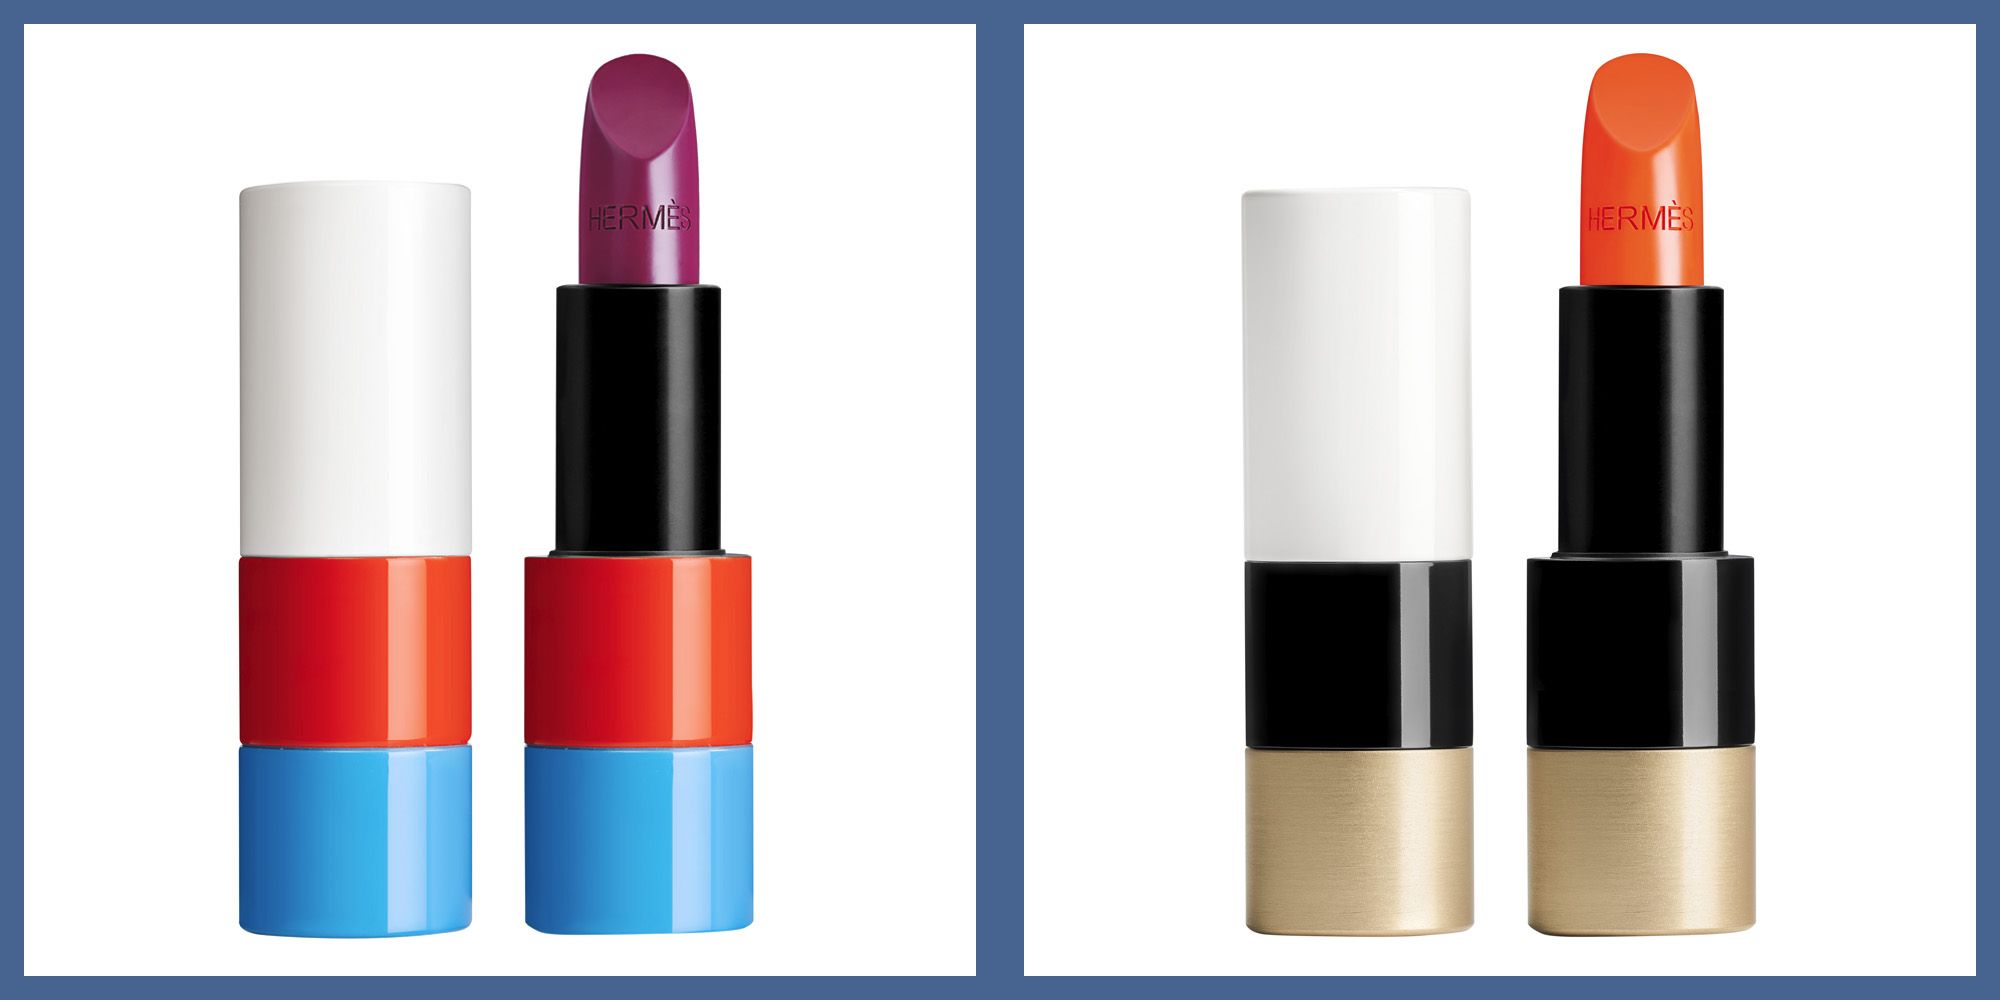 NEW Hermes Lipstick Sample 0.007 oz. CHOOSE YOUR COLOR!